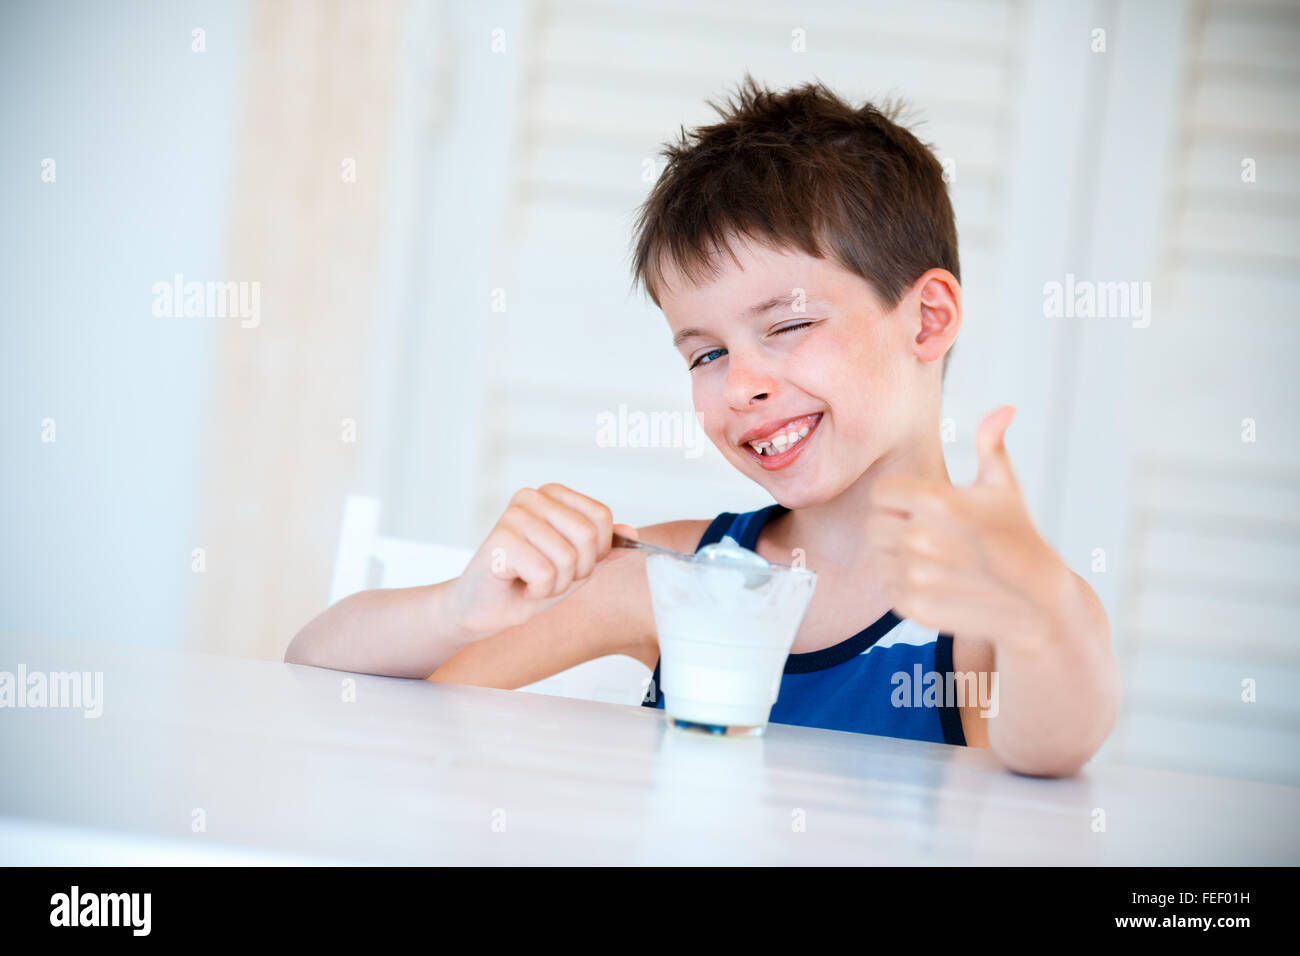 Smiling little boy eating delicious yogurt Stock Photo